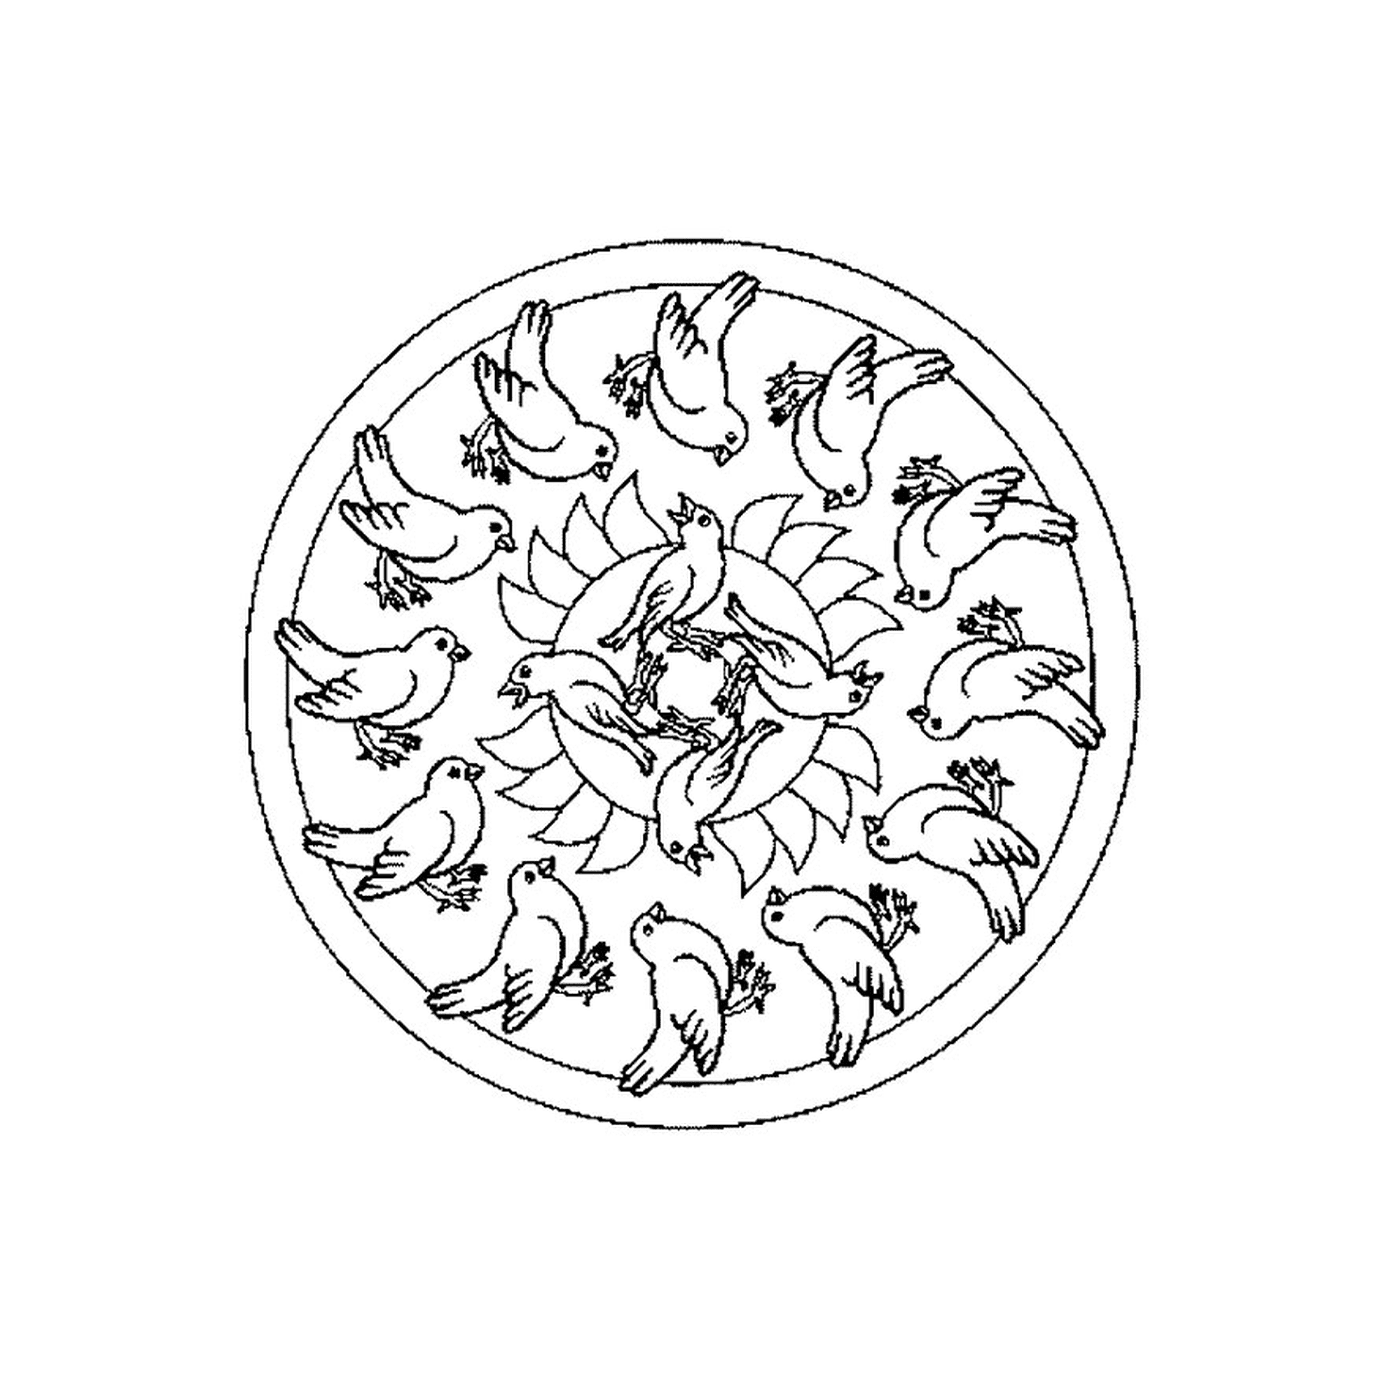   Mandala avec oiseau au centre 